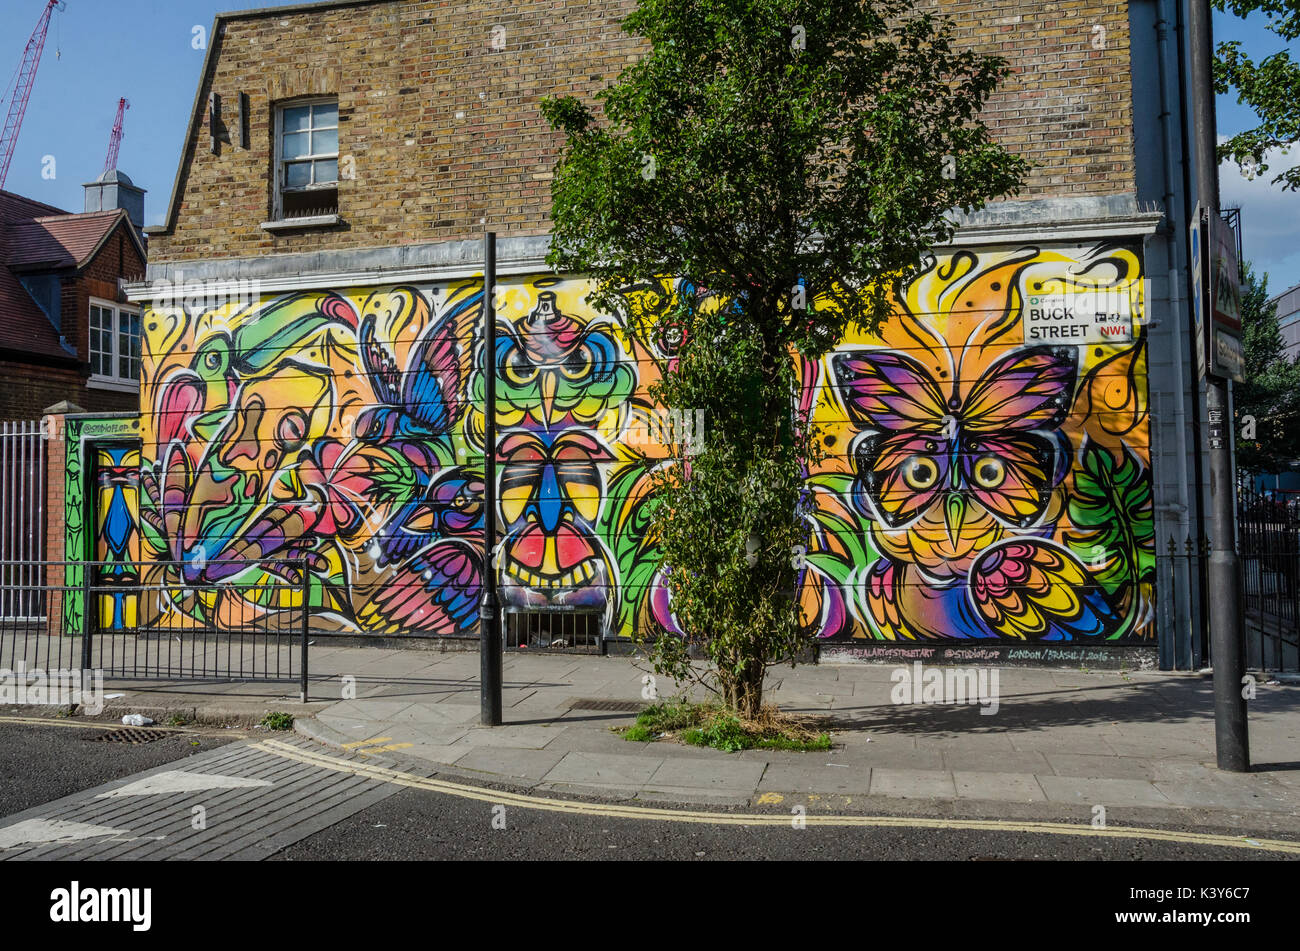 Colourful street art adorns a wall on Buck Street in Camden town, London. Stock Photo